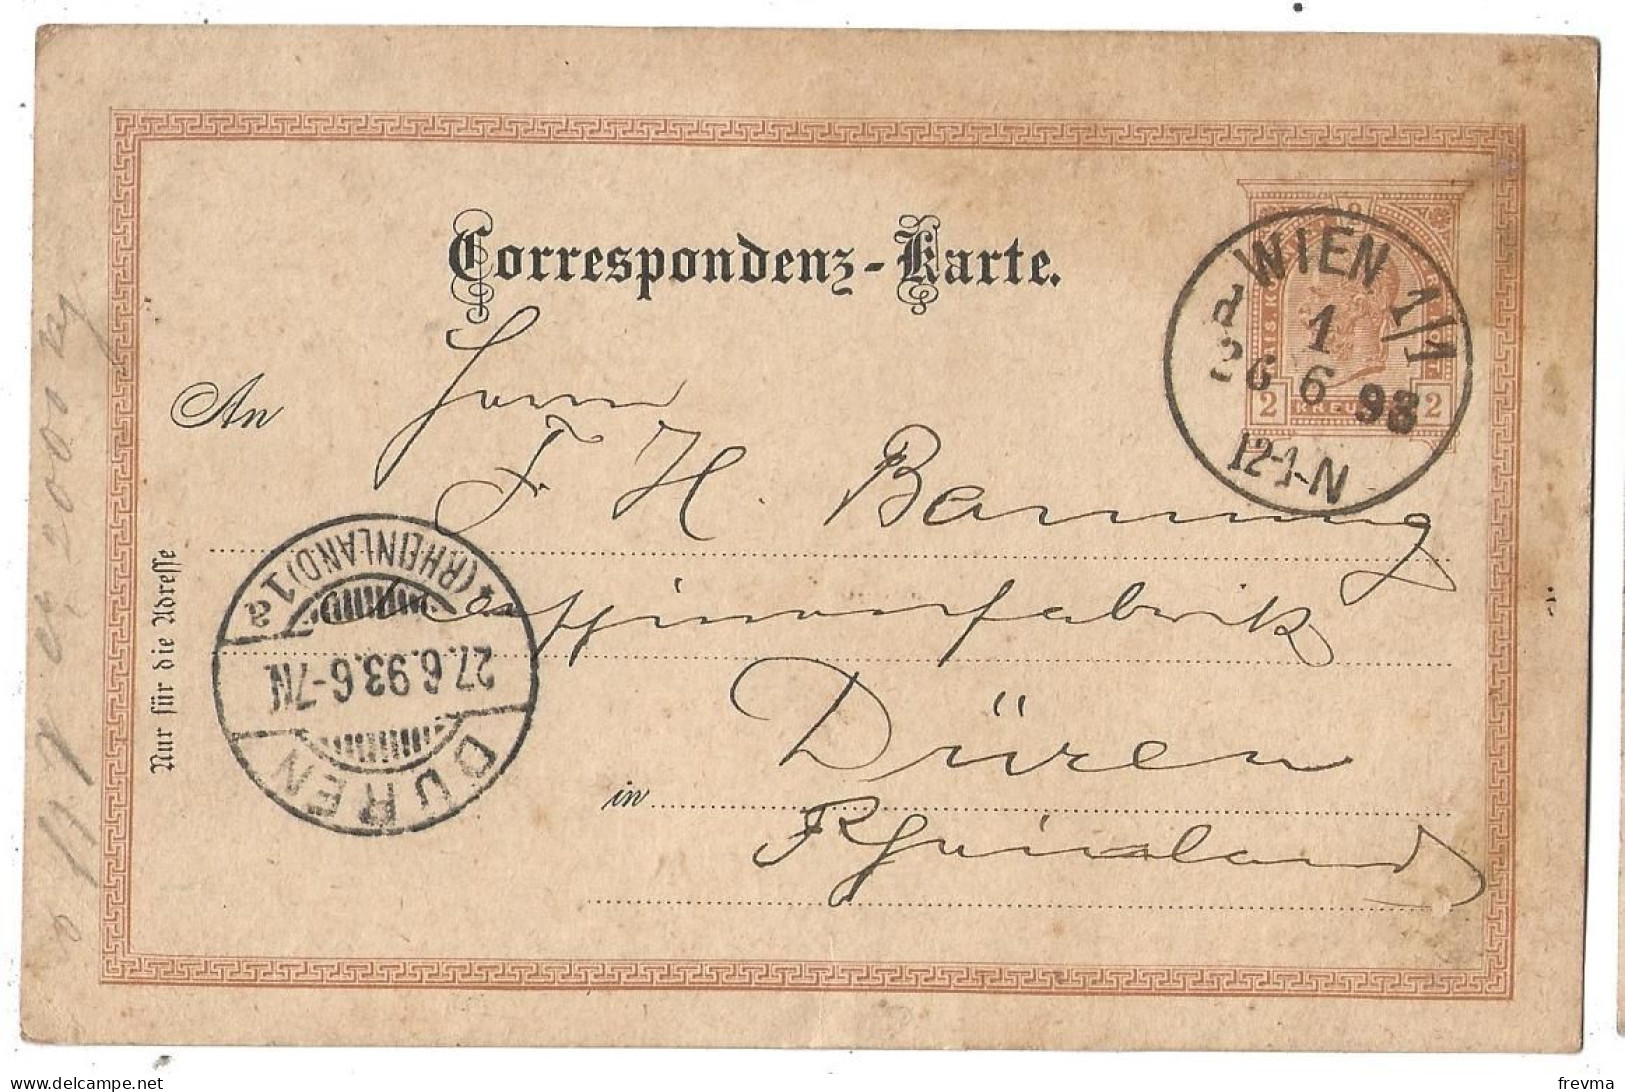 Entier Postaux Autriche Obliteration Duren Obliteration Wien 1898 - Letter-Cards